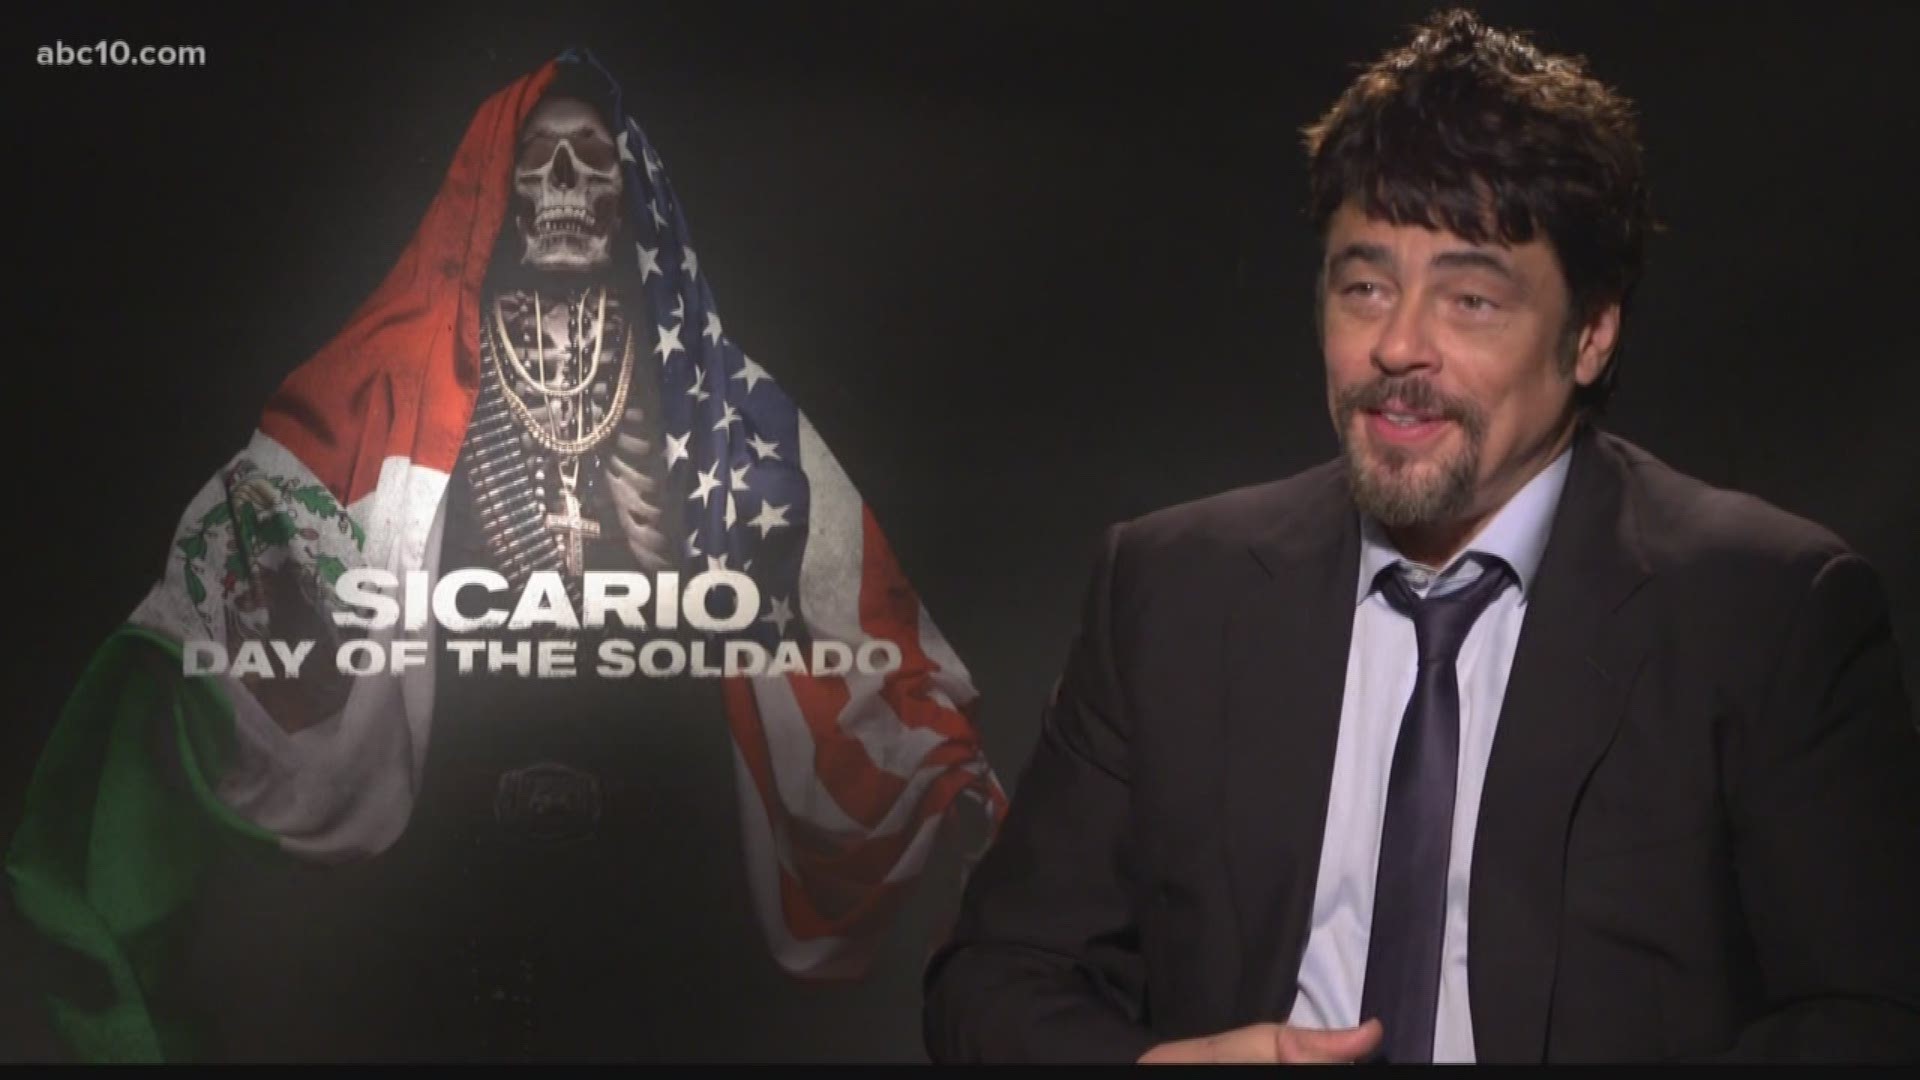 Mark S. Allen sat down with Benicio Del Toro to talk the summer blockbuster "Sicario: Day of the Soldado."